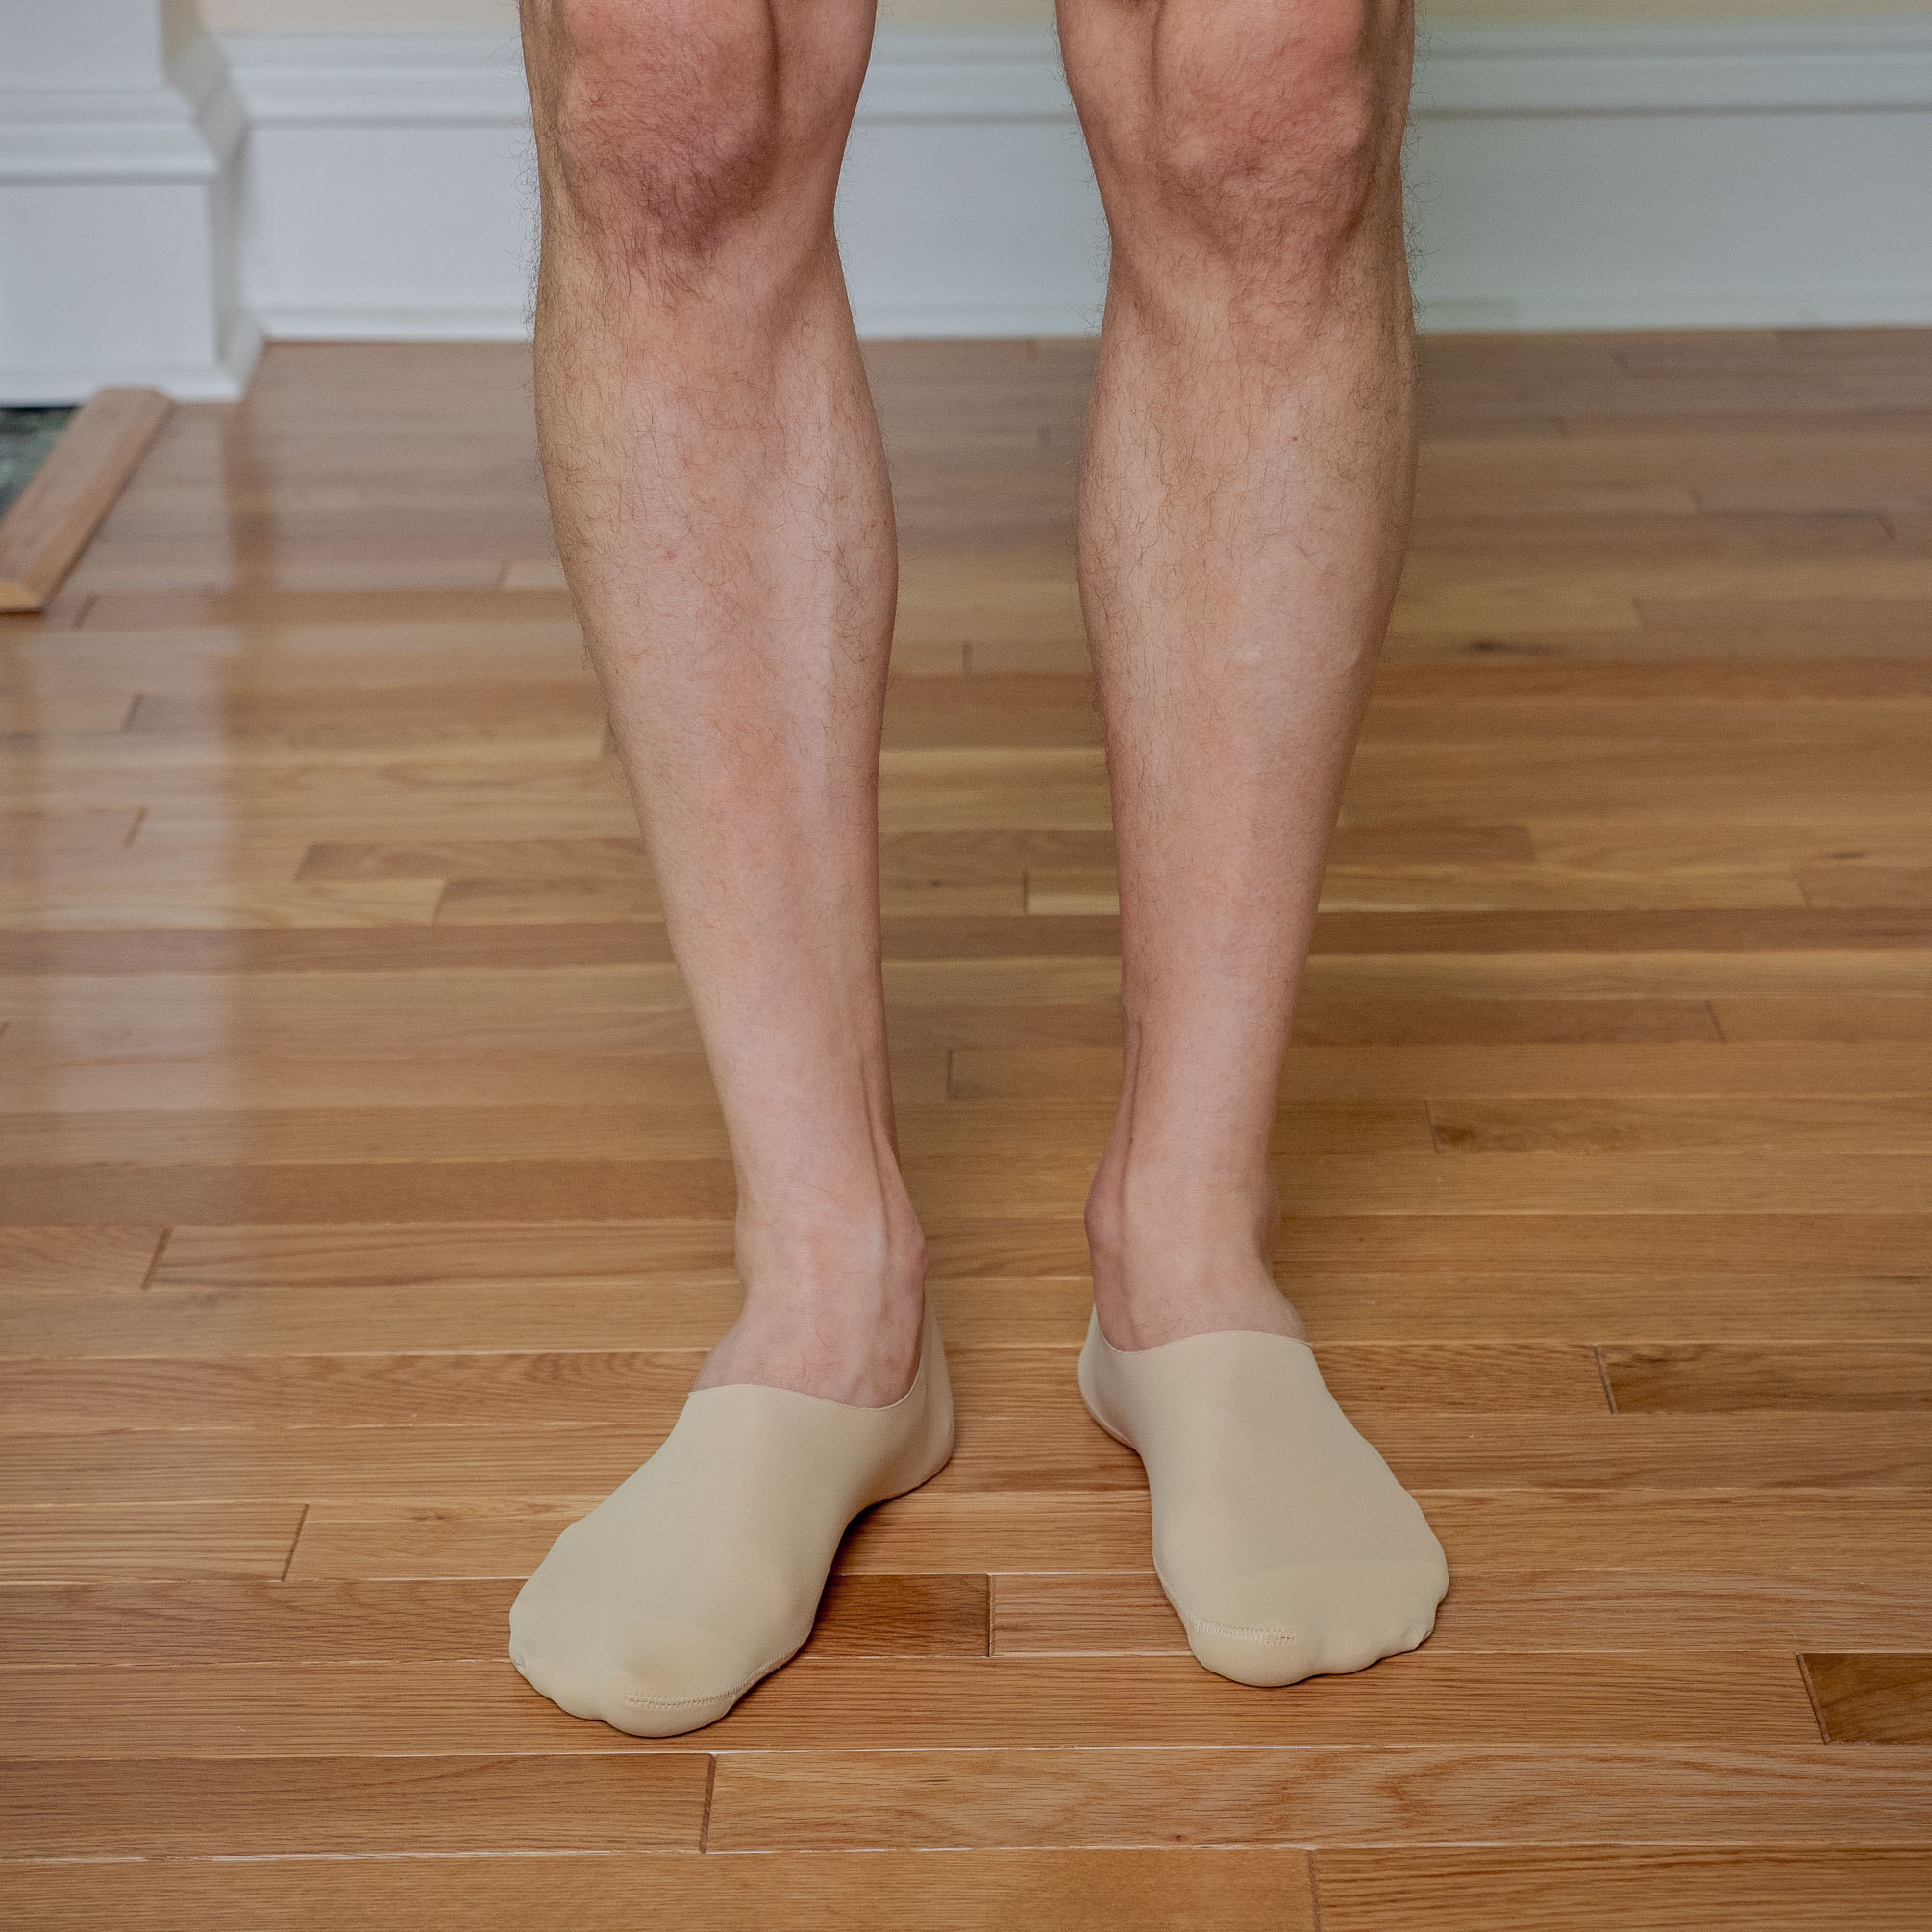 Shop Generic 1 Pair Low Cut Liner Socks Thin Socks for High Heel Shoes  Online